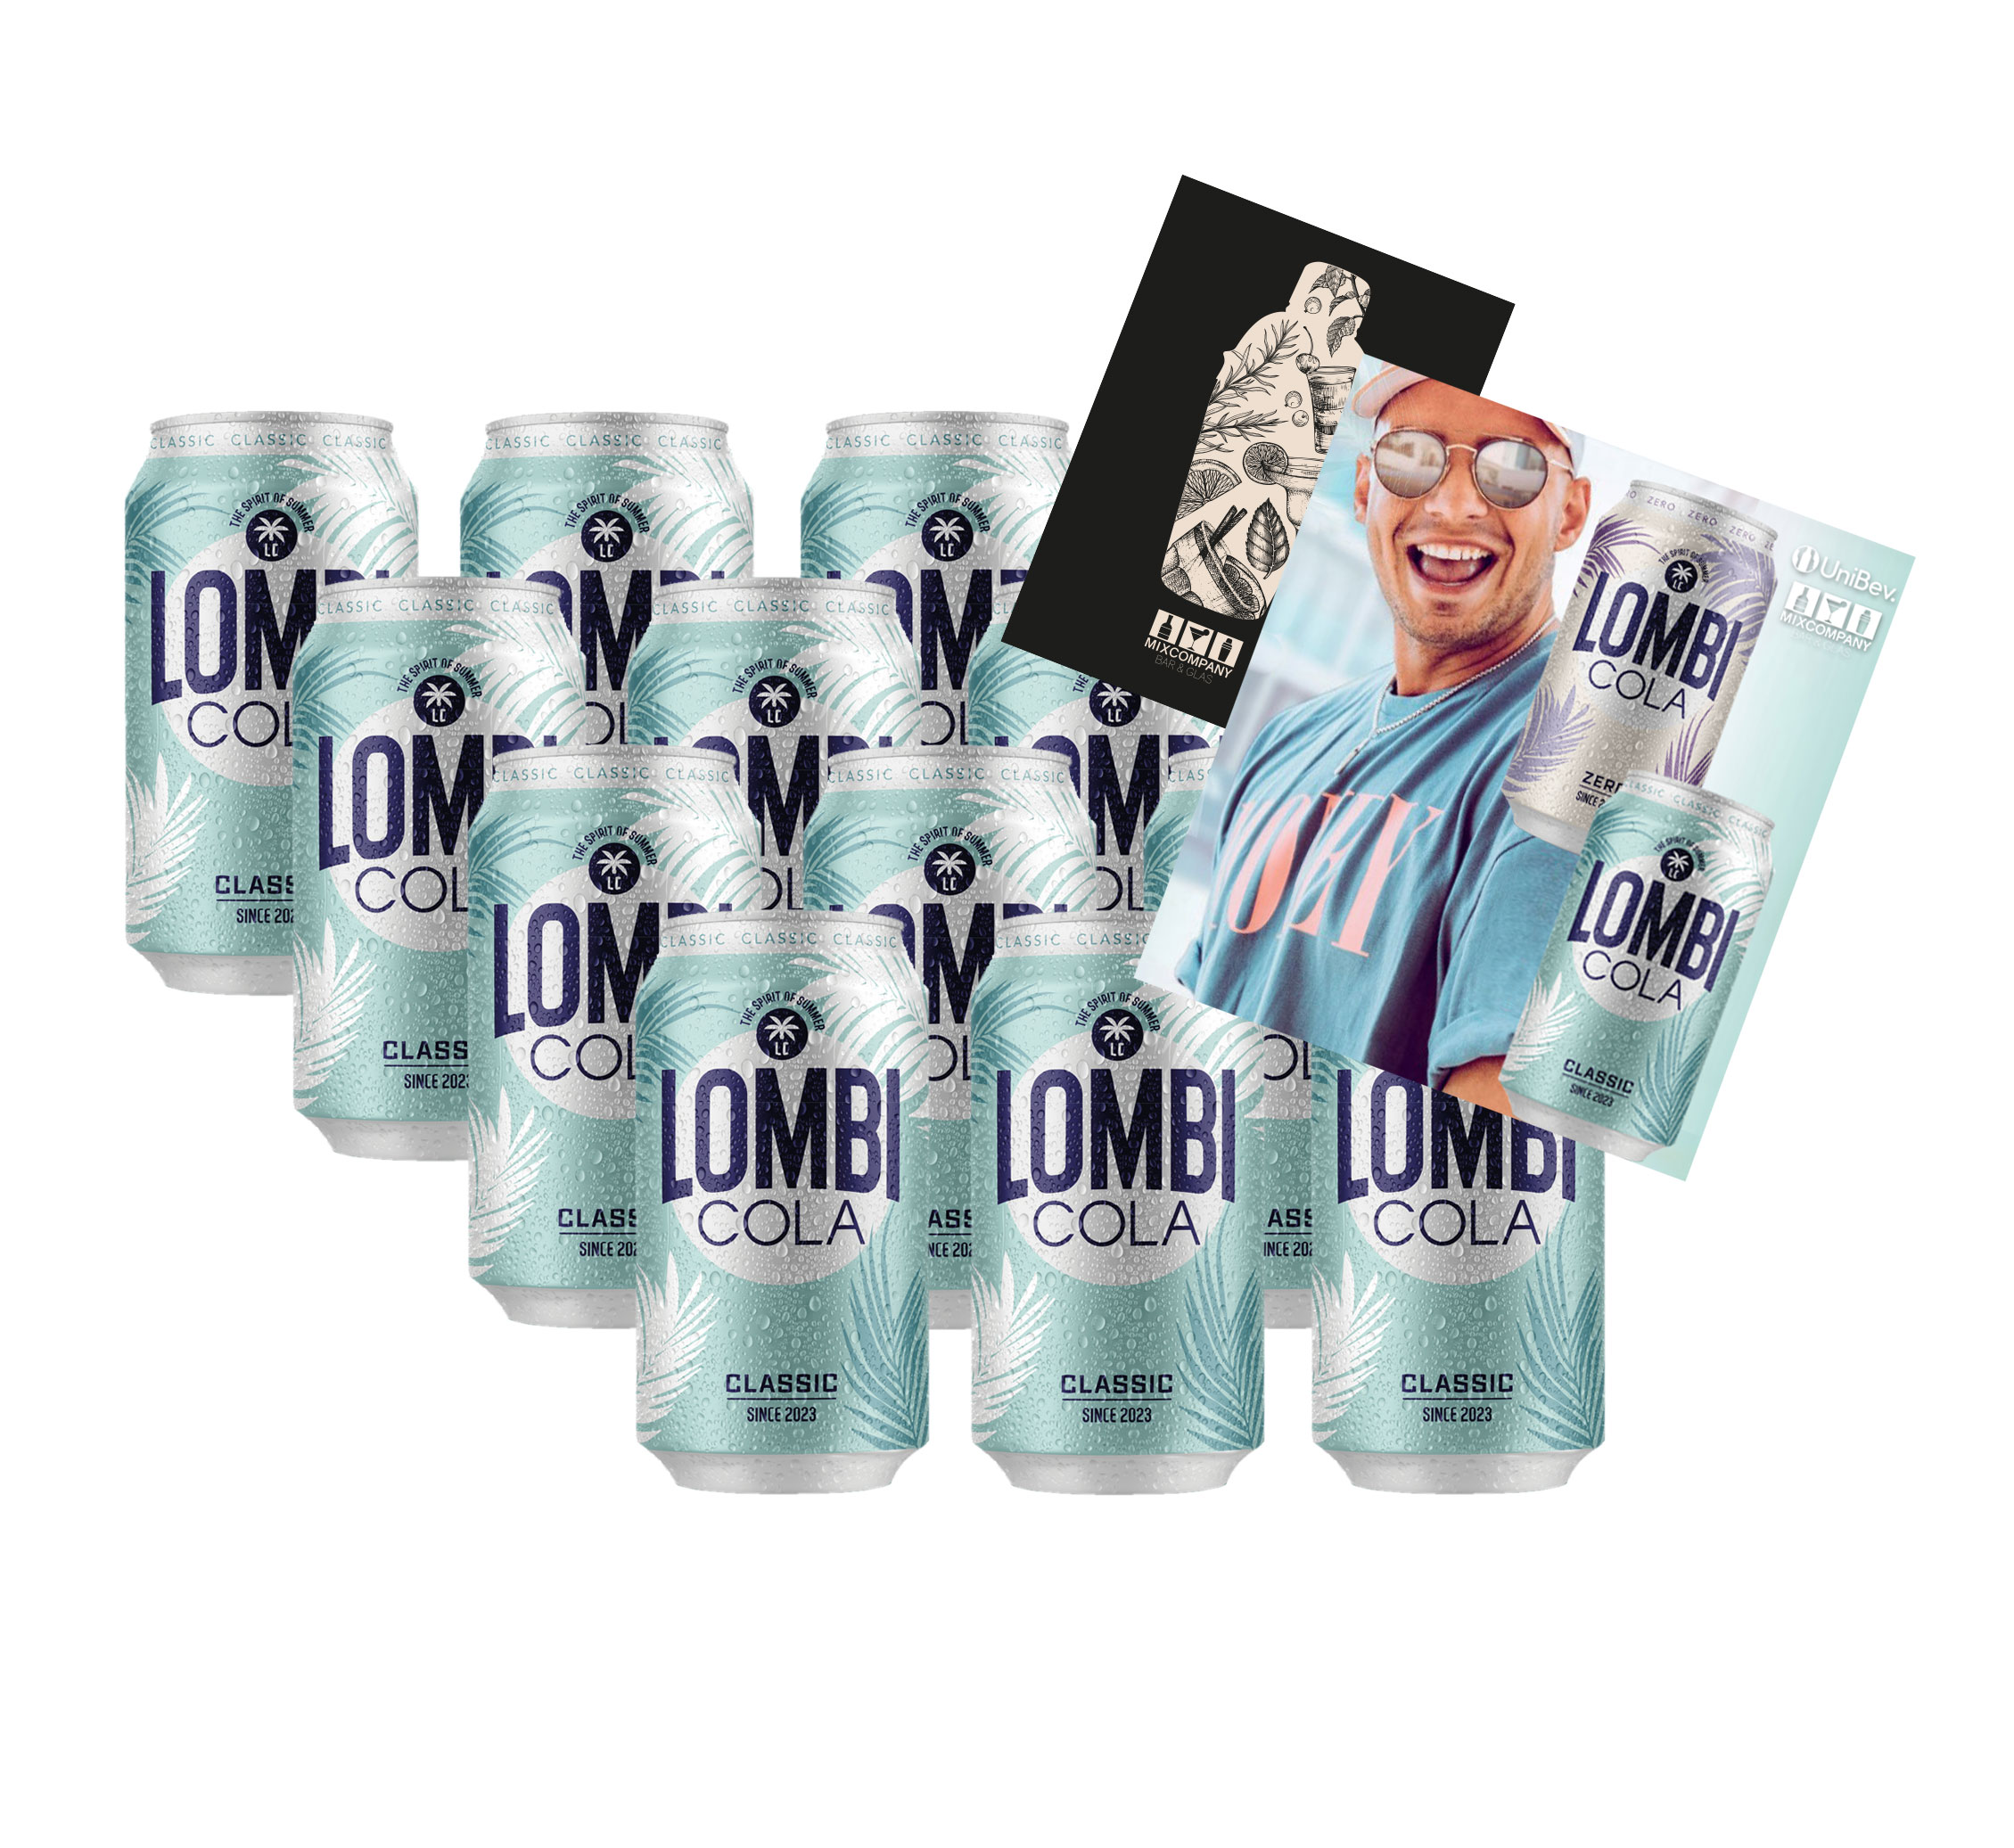 Lombi Cola - Sänger Pietro Lombardi Cola - 12er Set Lombi Cola 12x 0,33L mit Lombi Postkarte inkl. Pfand EINWEG 